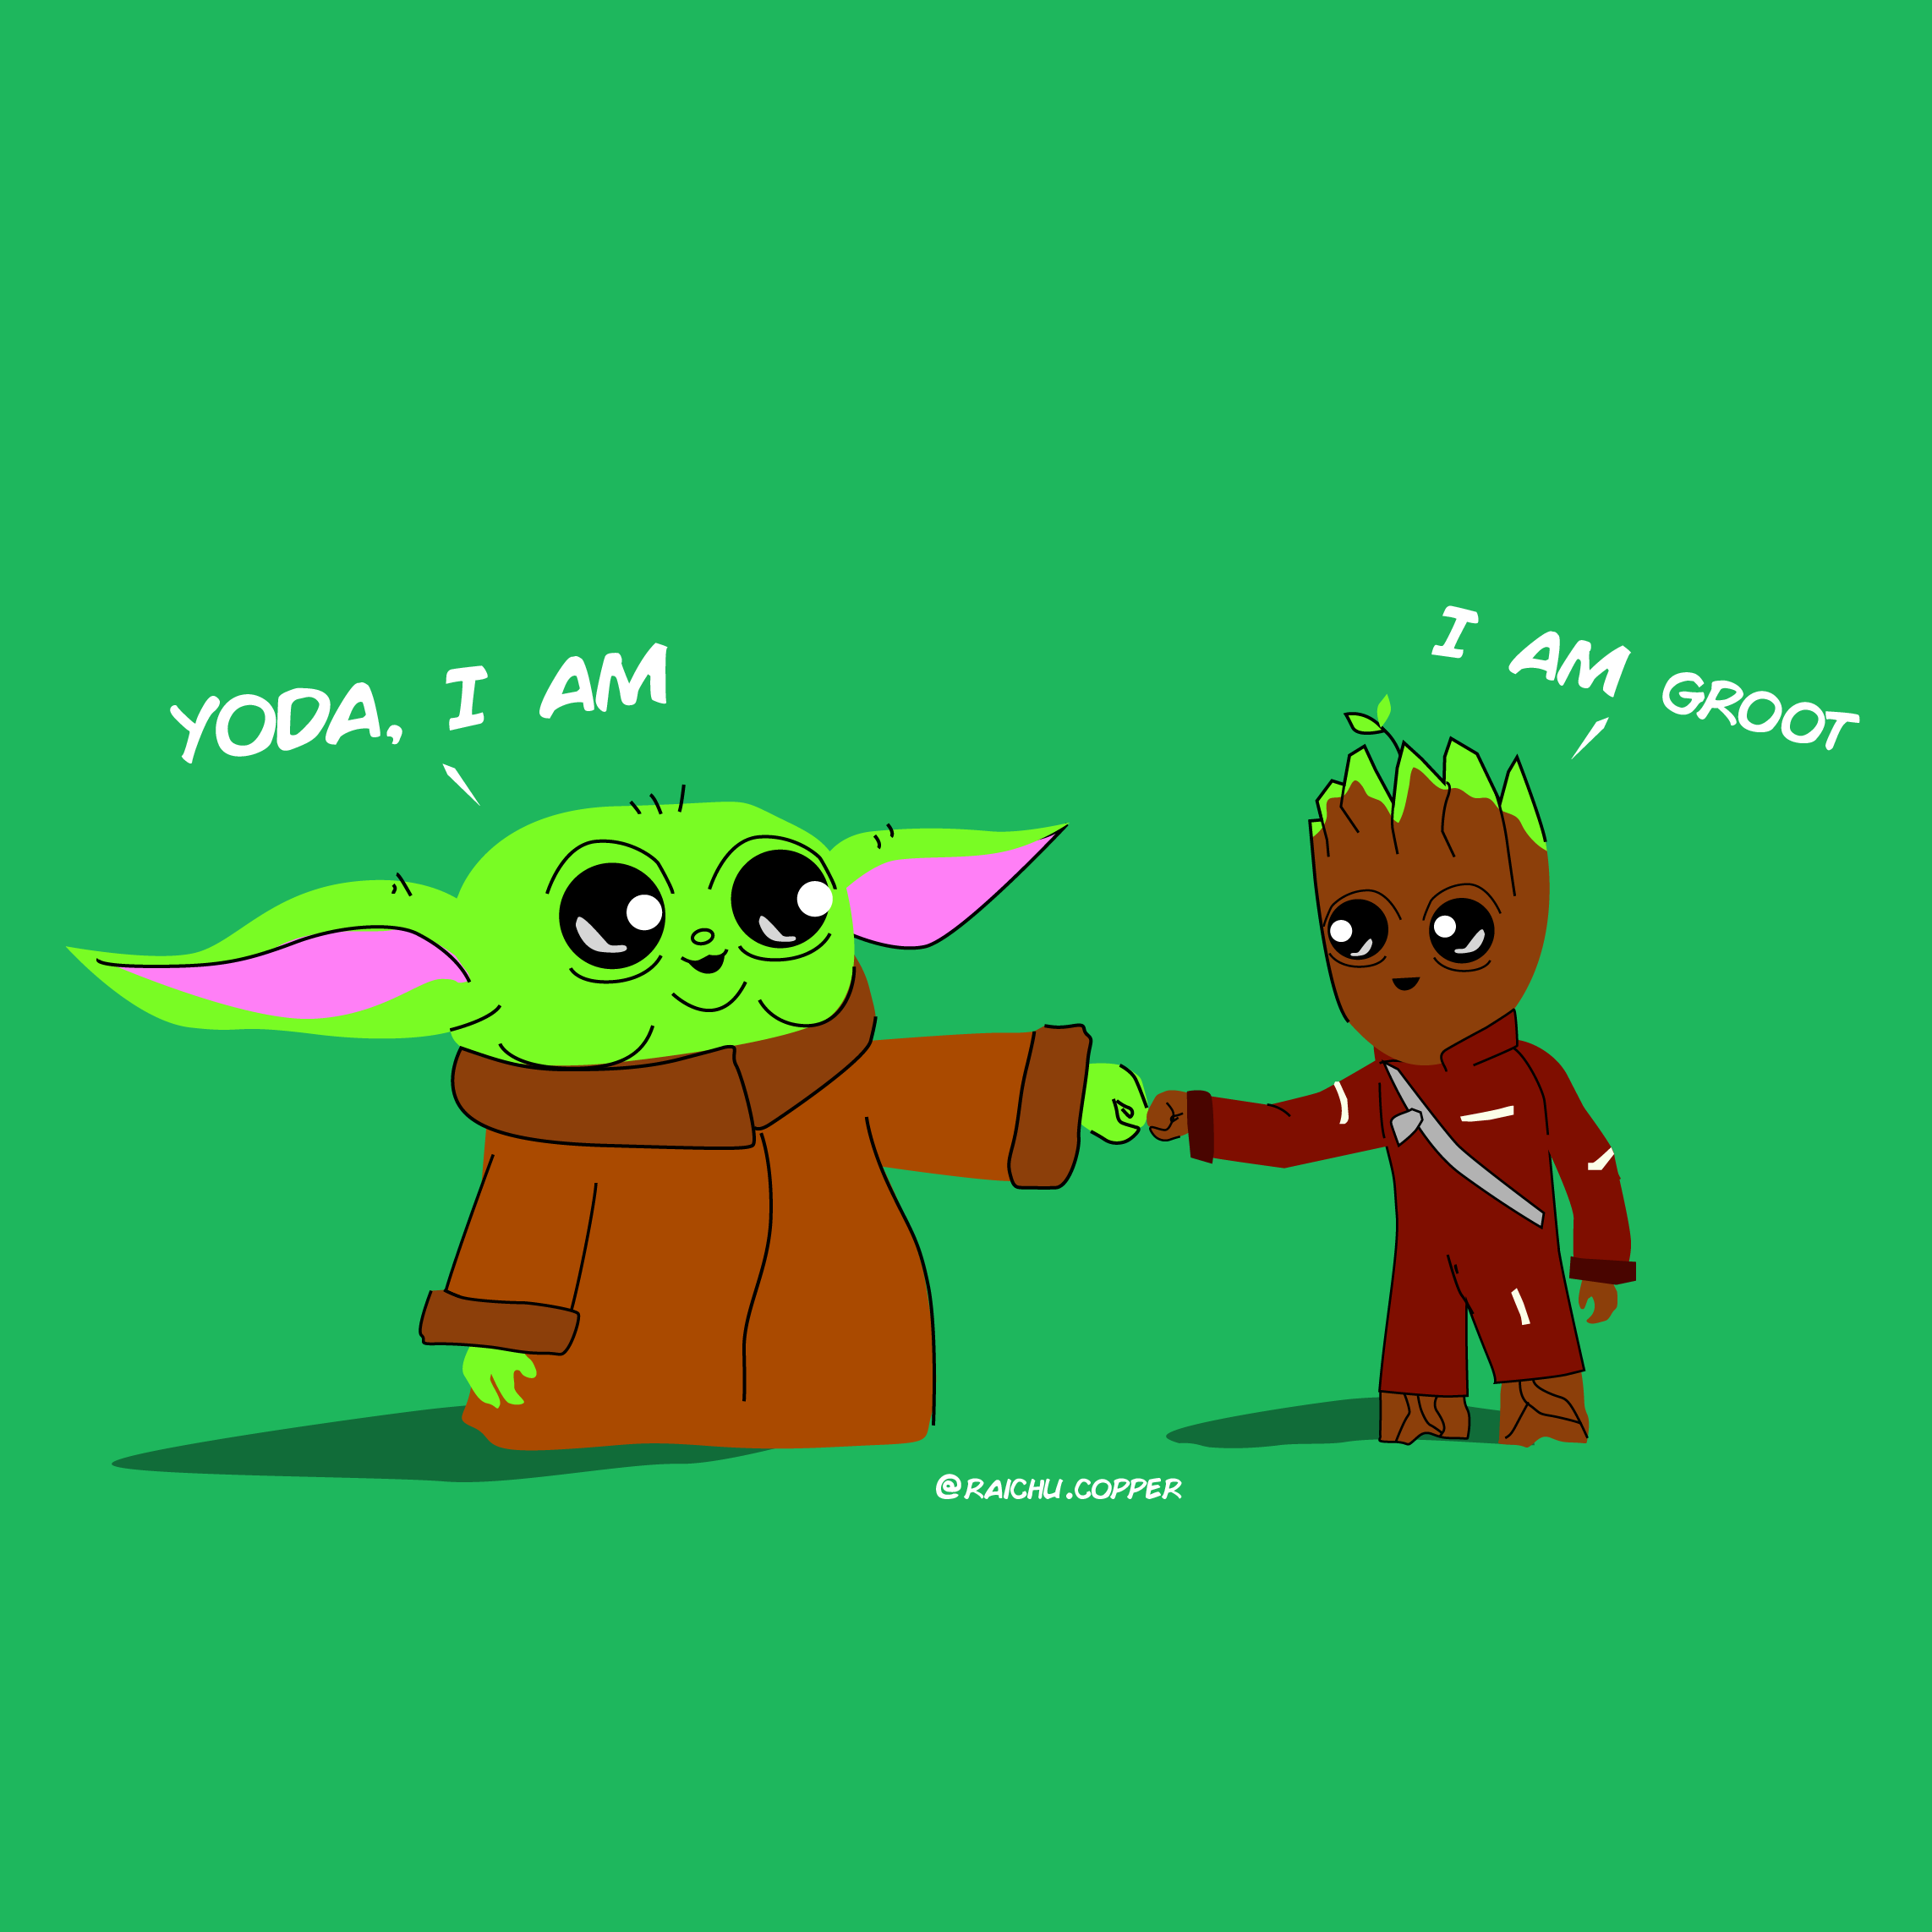 Baby Yoda meets Baby Groot?